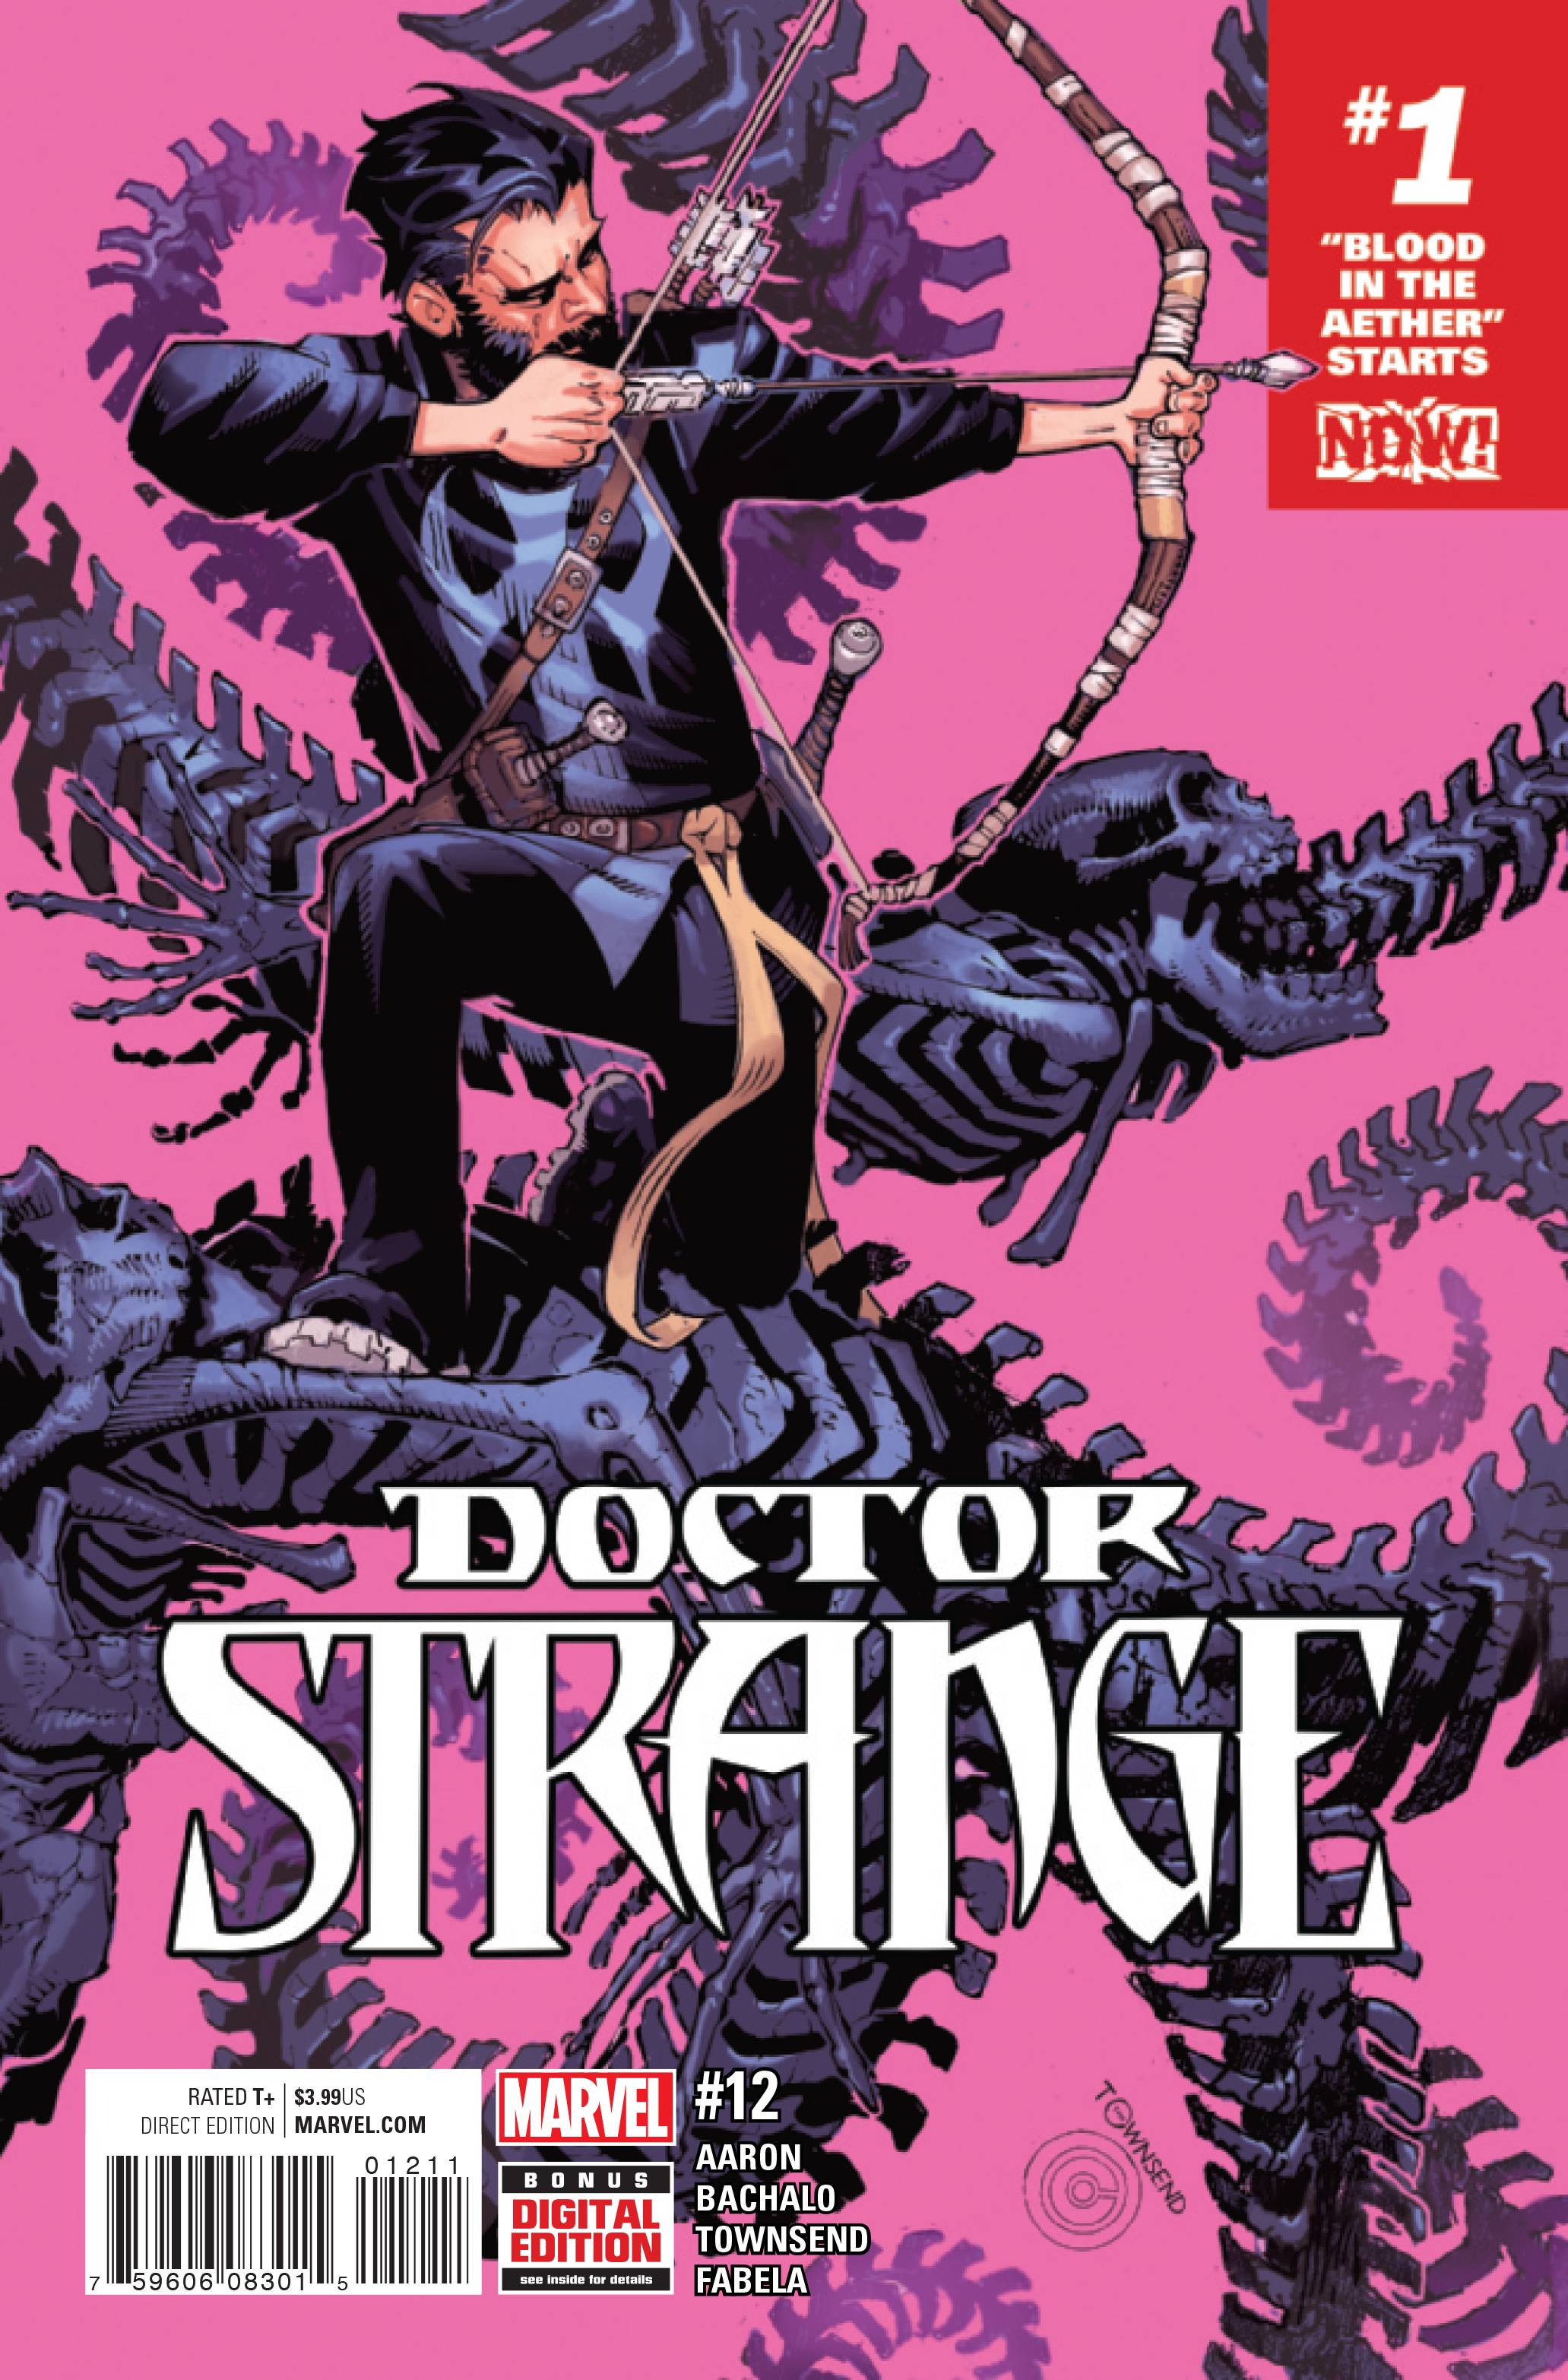 DOCTOR STRANGE #12 NOW